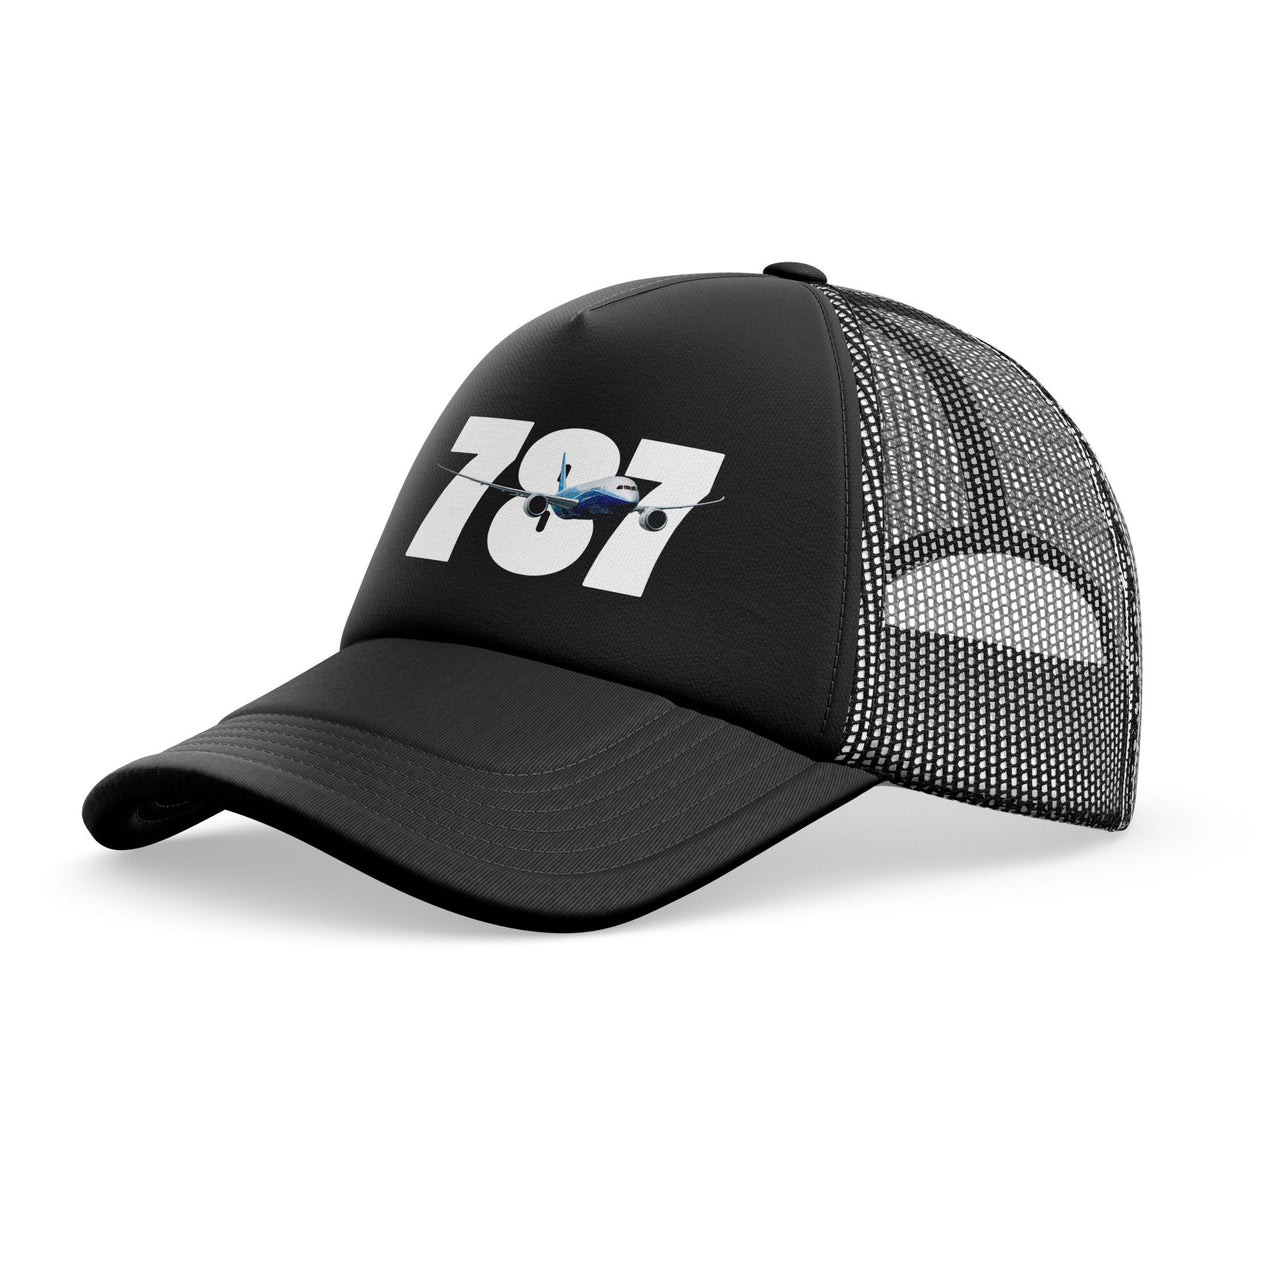 Super Boeing 787 Designed Trucker Caps & Hats